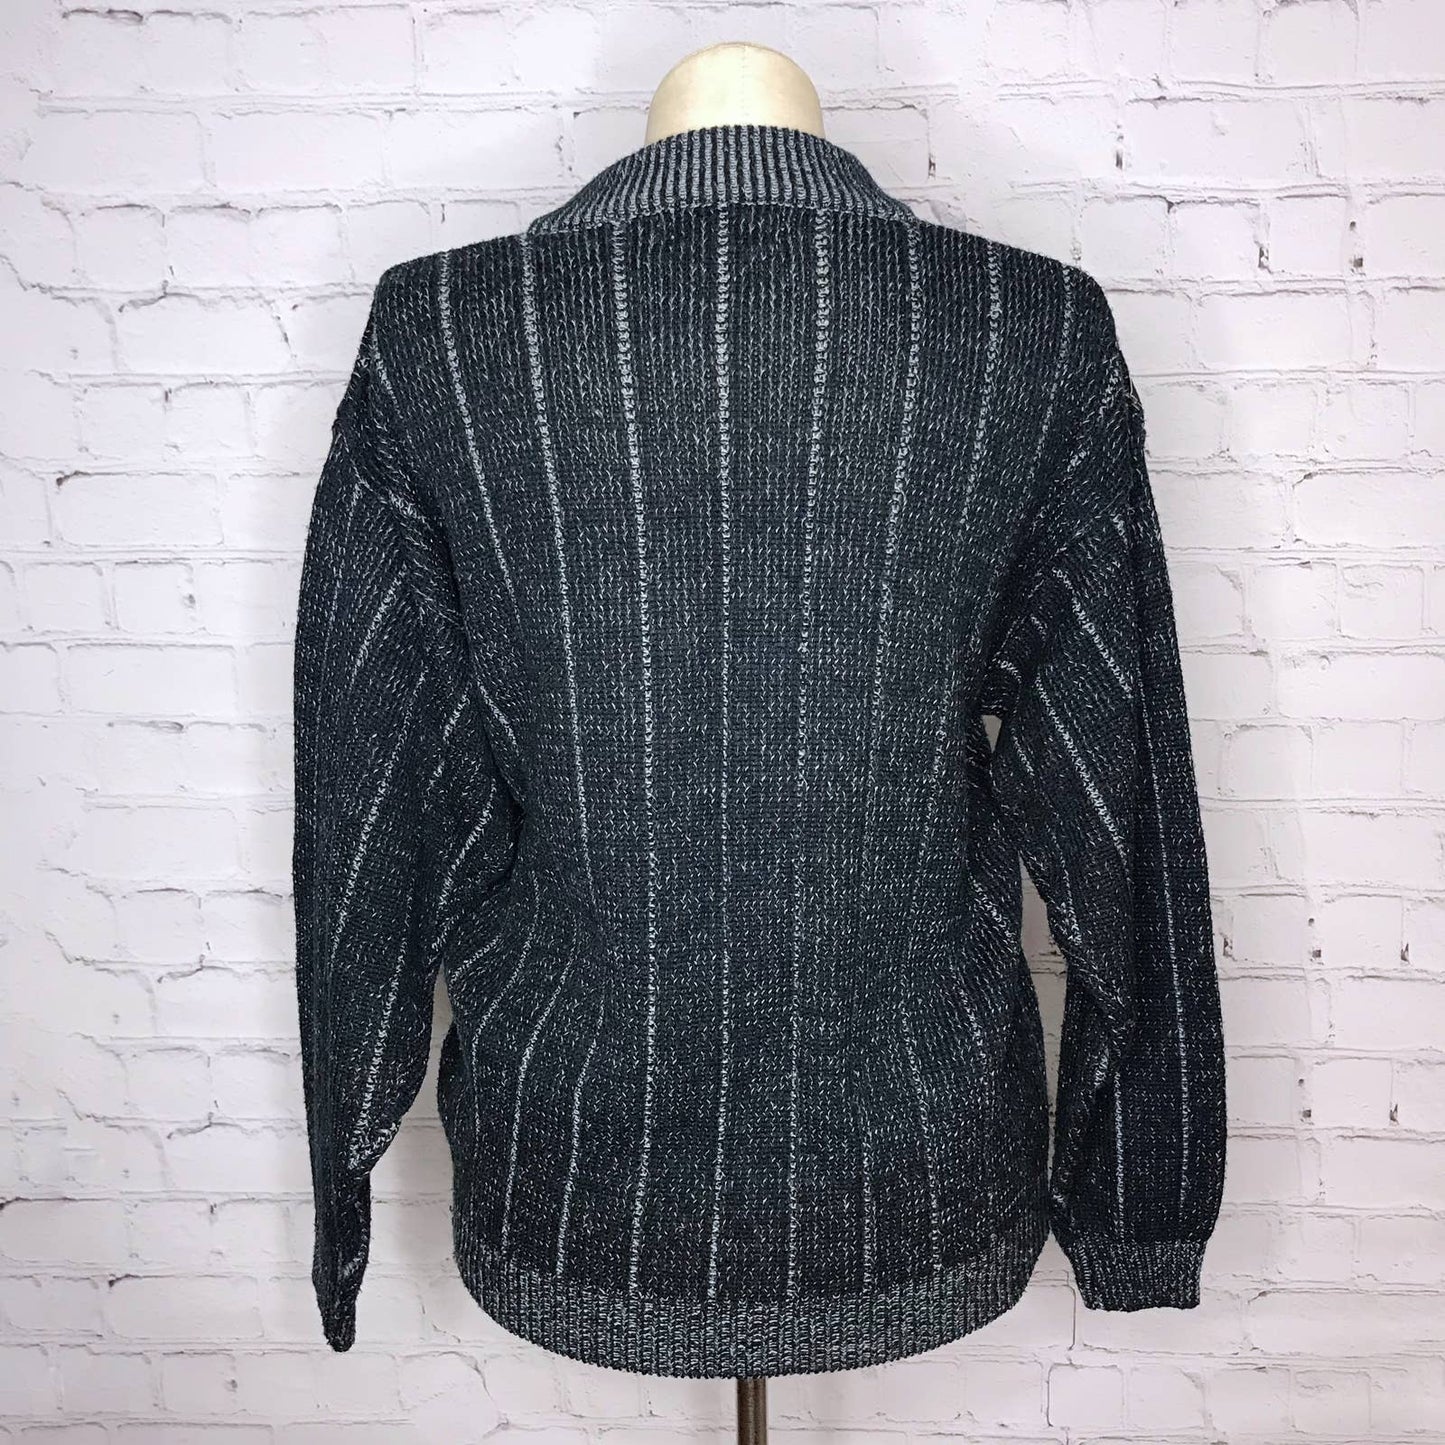 Vintage 80s Black Sweater with Leather Trim Industrial Unisex Santana Size M